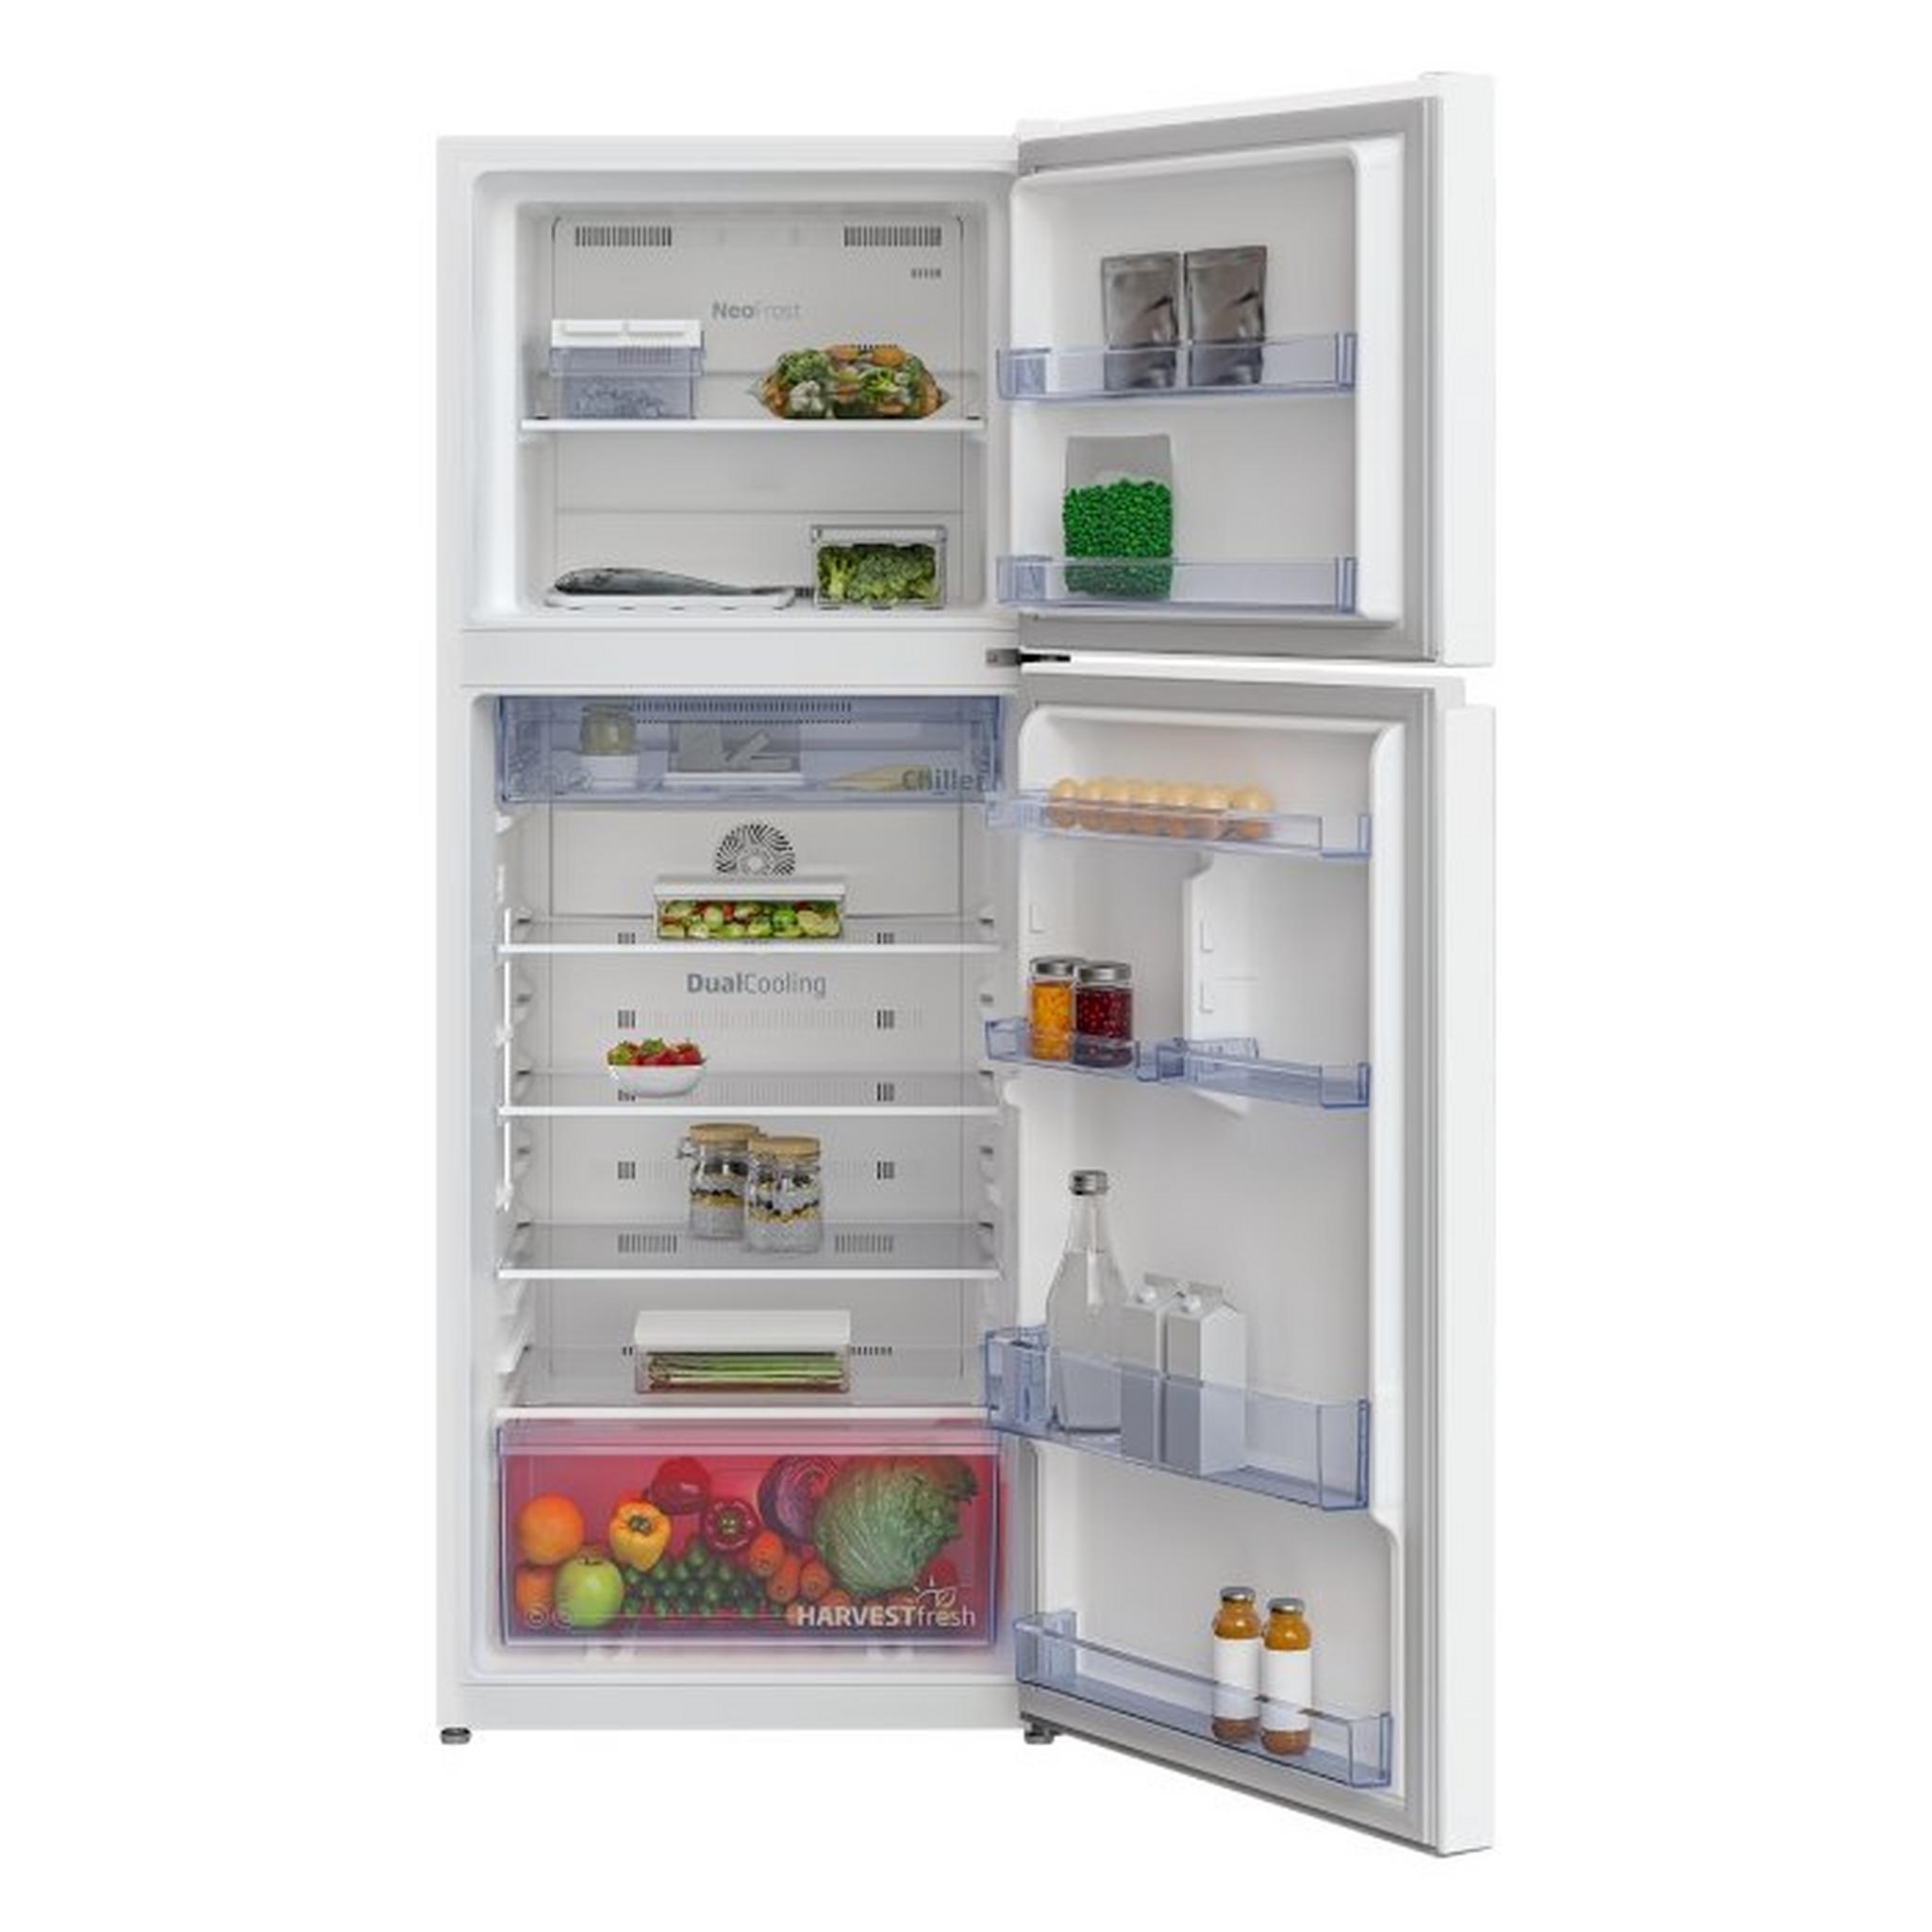 Beko Top Mount Refrigerator, 14.4CFT, 409-Liters, RDNT401W - White